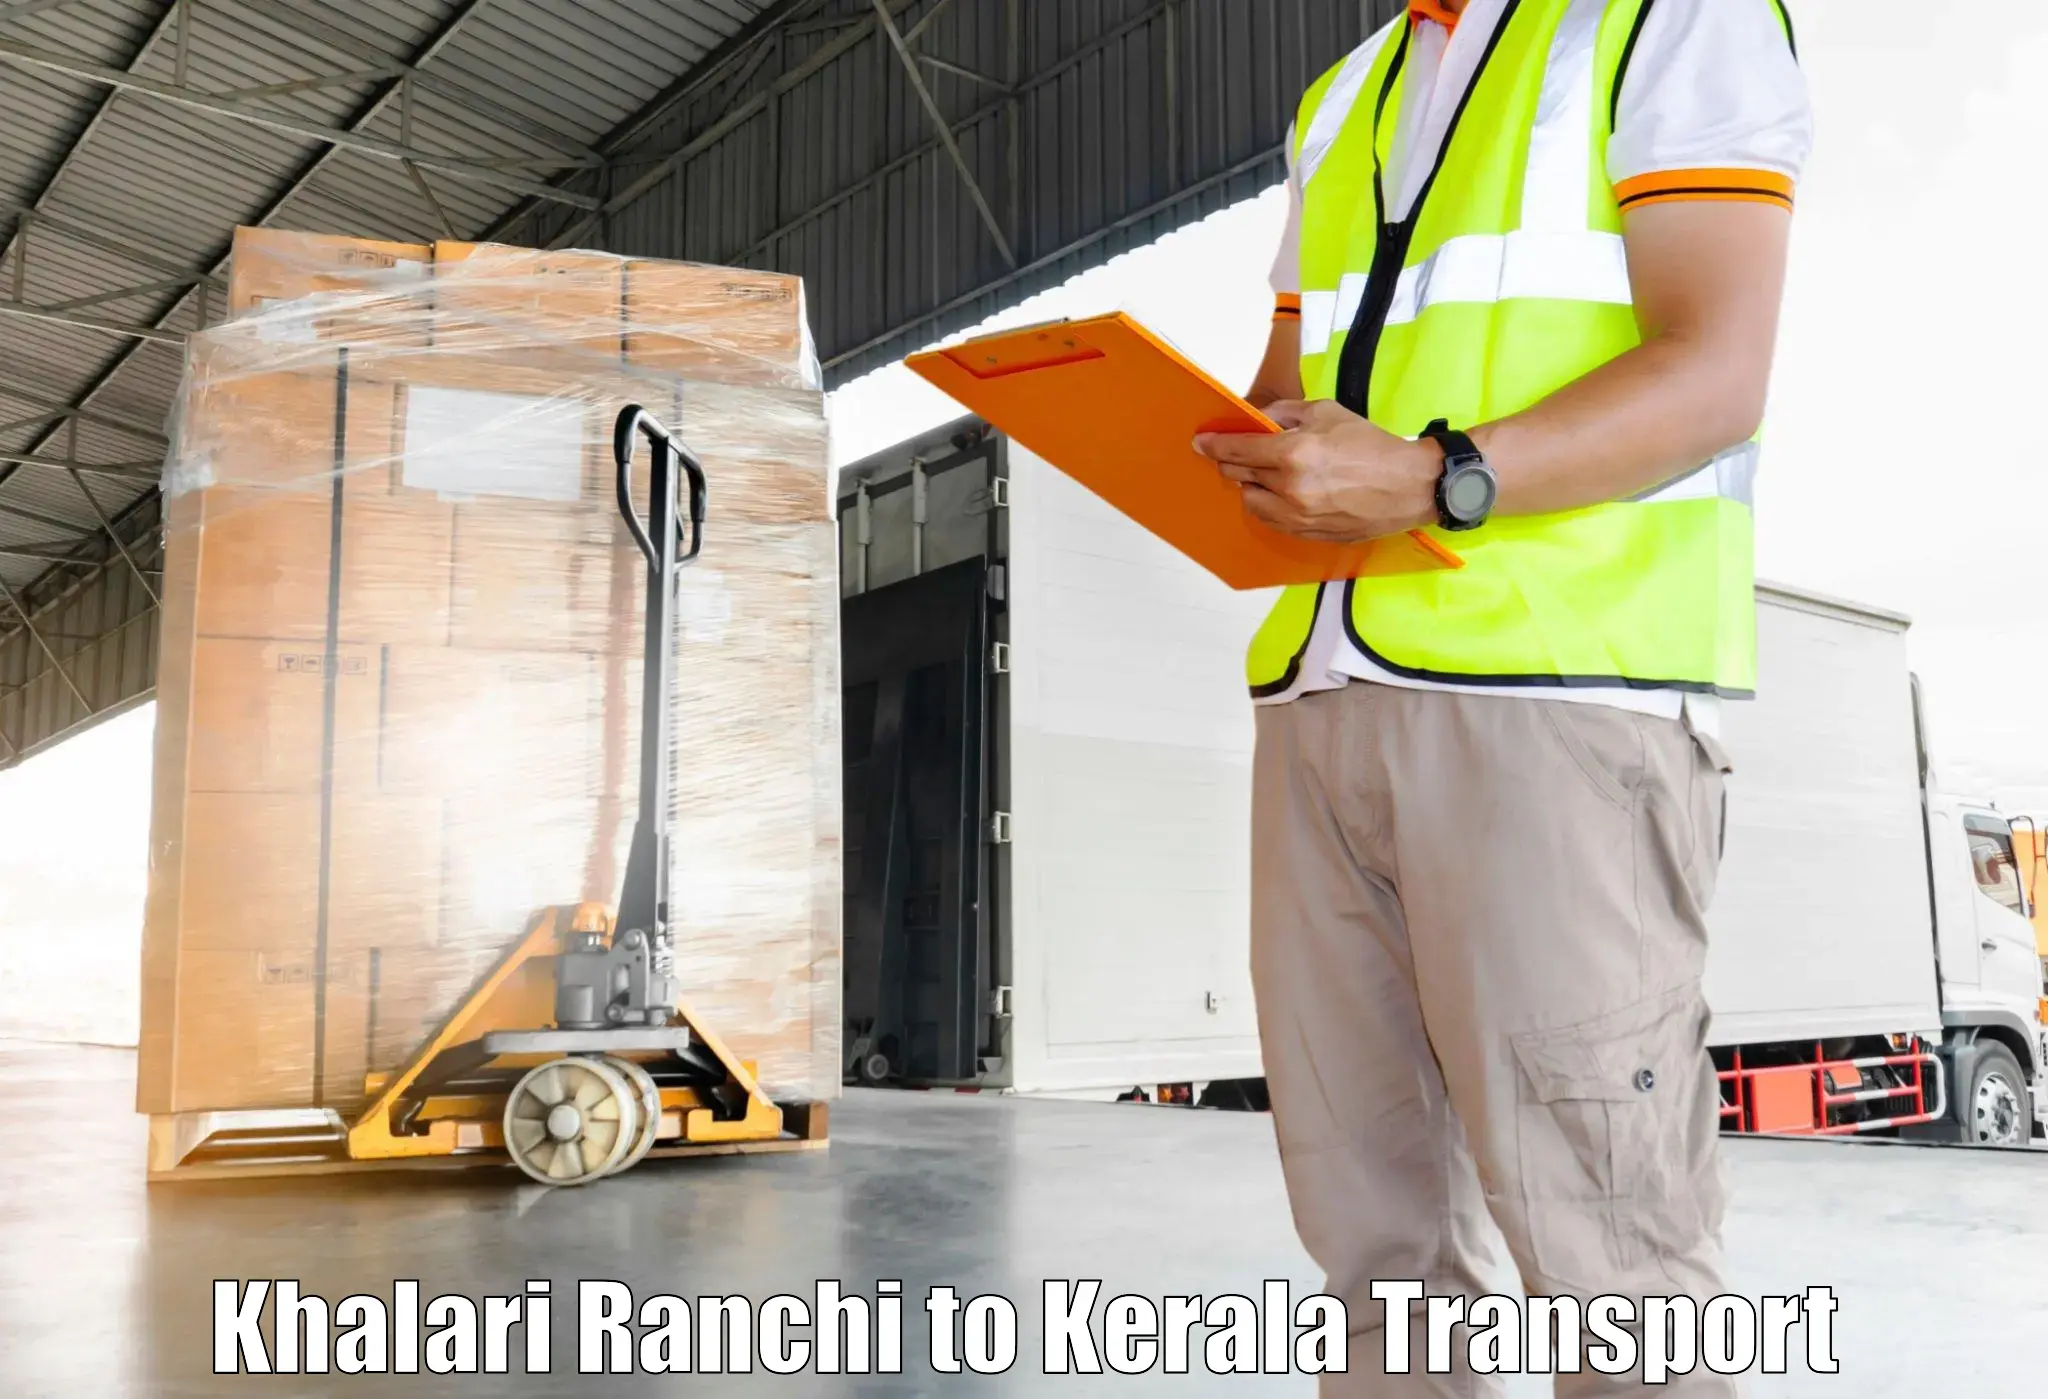 Container transport service Khalari Ranchi to Palakkad